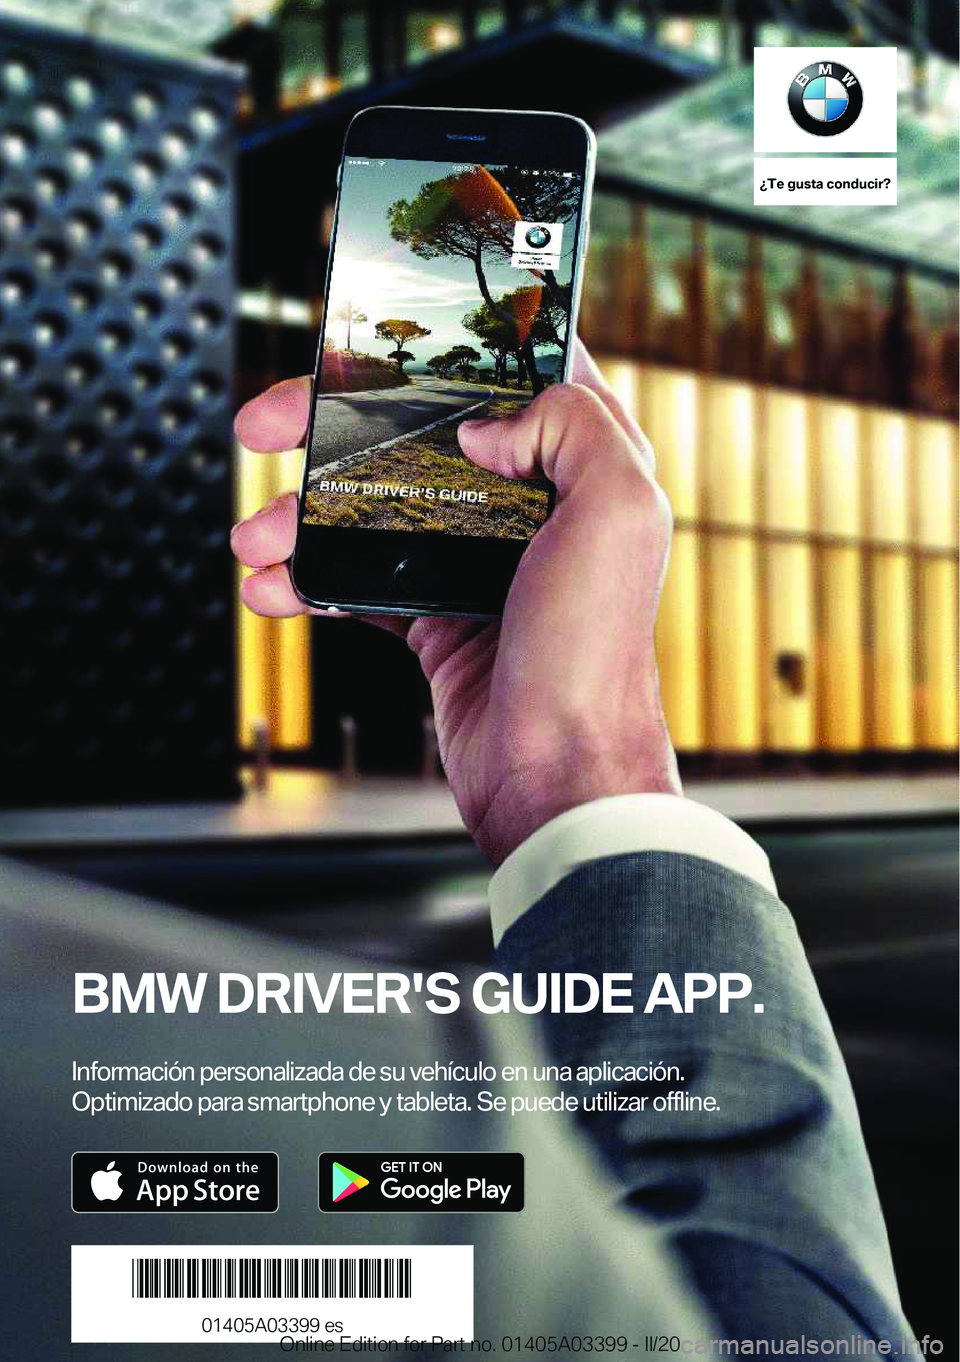 BMW M8 GRAN COUPE 2020  Manuales de Empleo (in Spanish) ��T�e��g�u�s�t�a��c�o�n�d�u�c�i�r� 
�B�M�W��D�R�I�V�E�R�'�S��G�U�I�D�E��A�P�P�.�*�n�f�o�r�m�a�c�i�